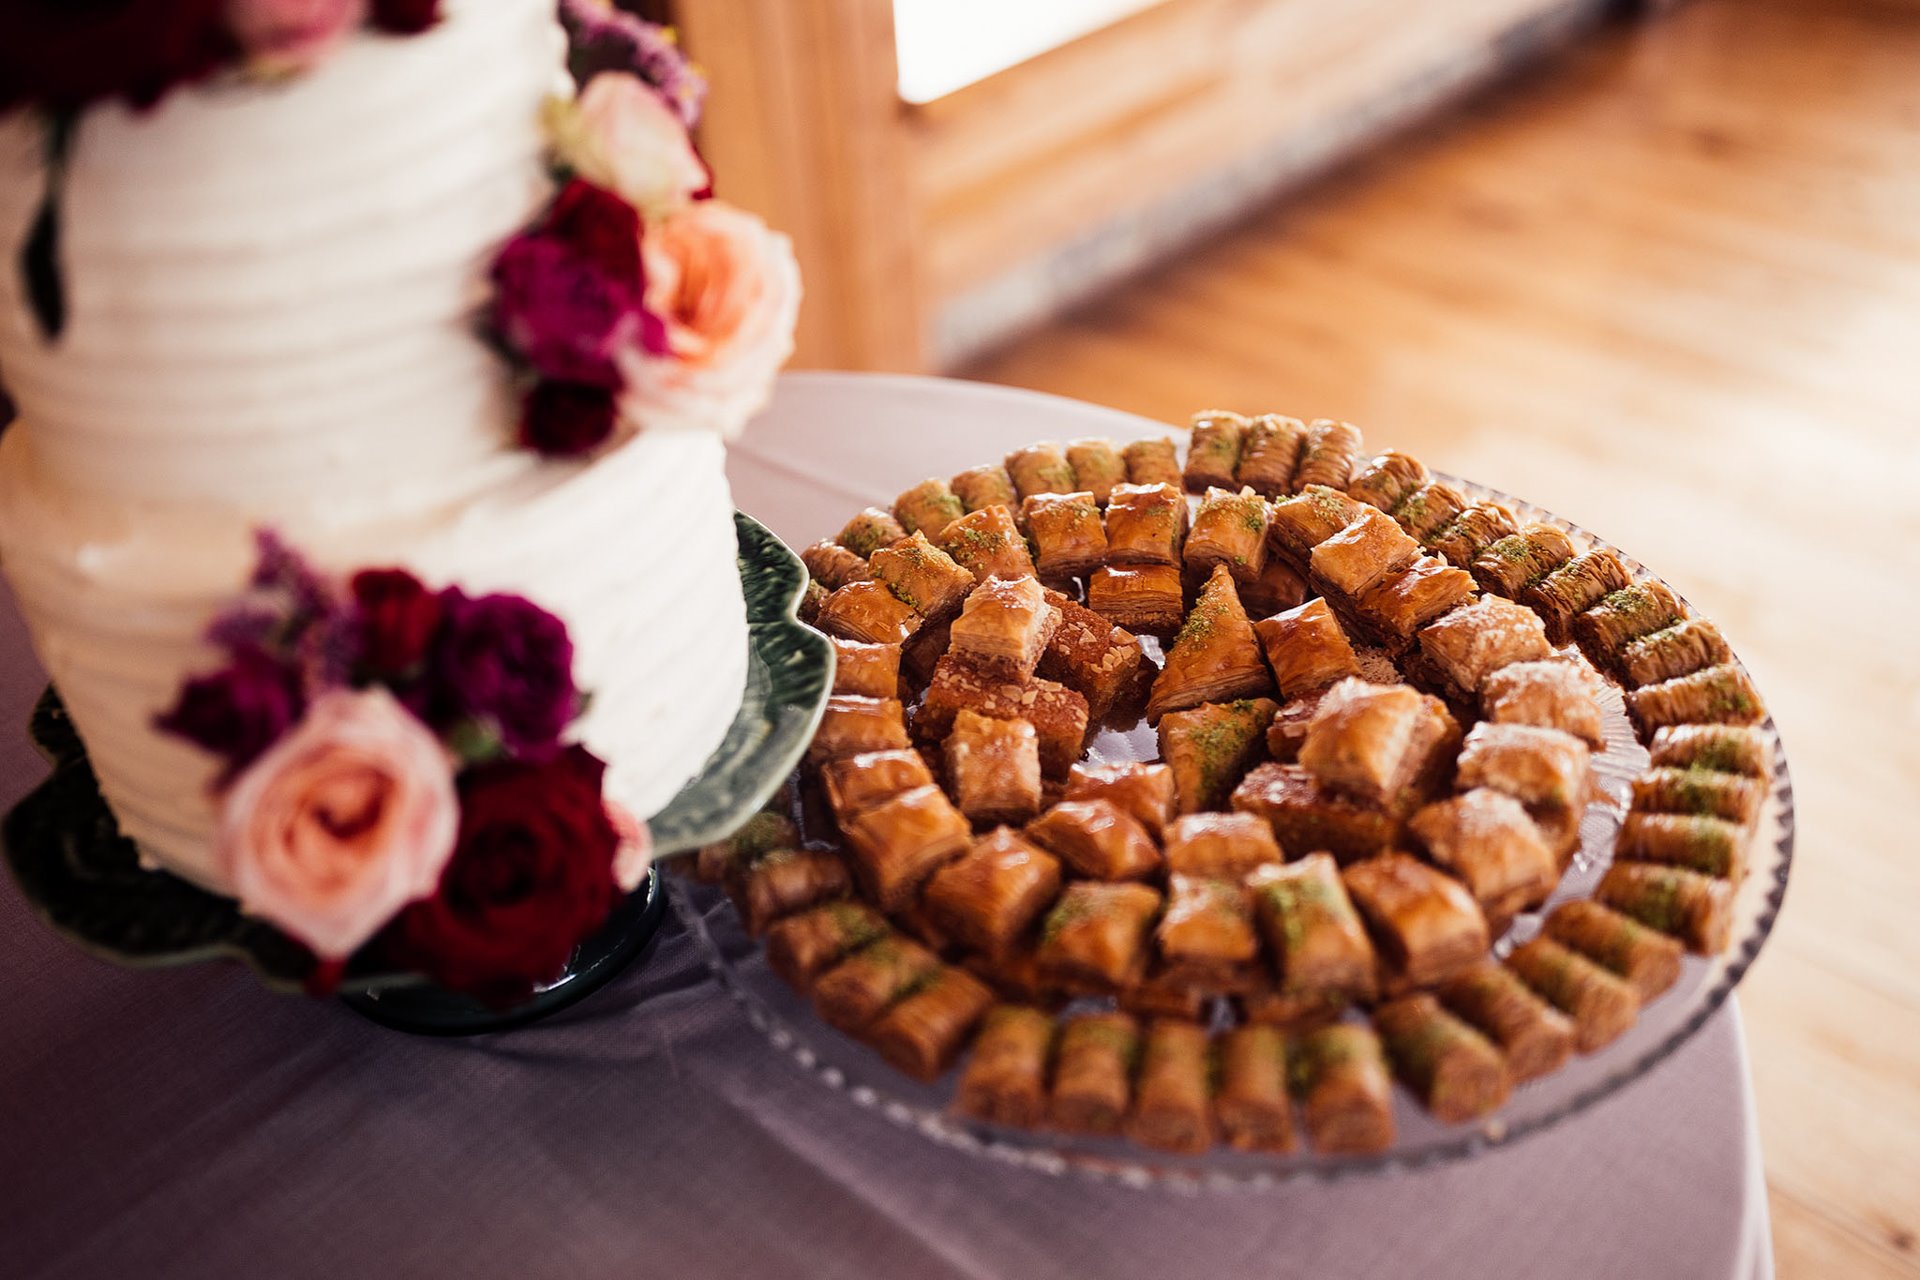 Iranian wedding food and beautiful three tier wedding cake at cotswolds wedding reception